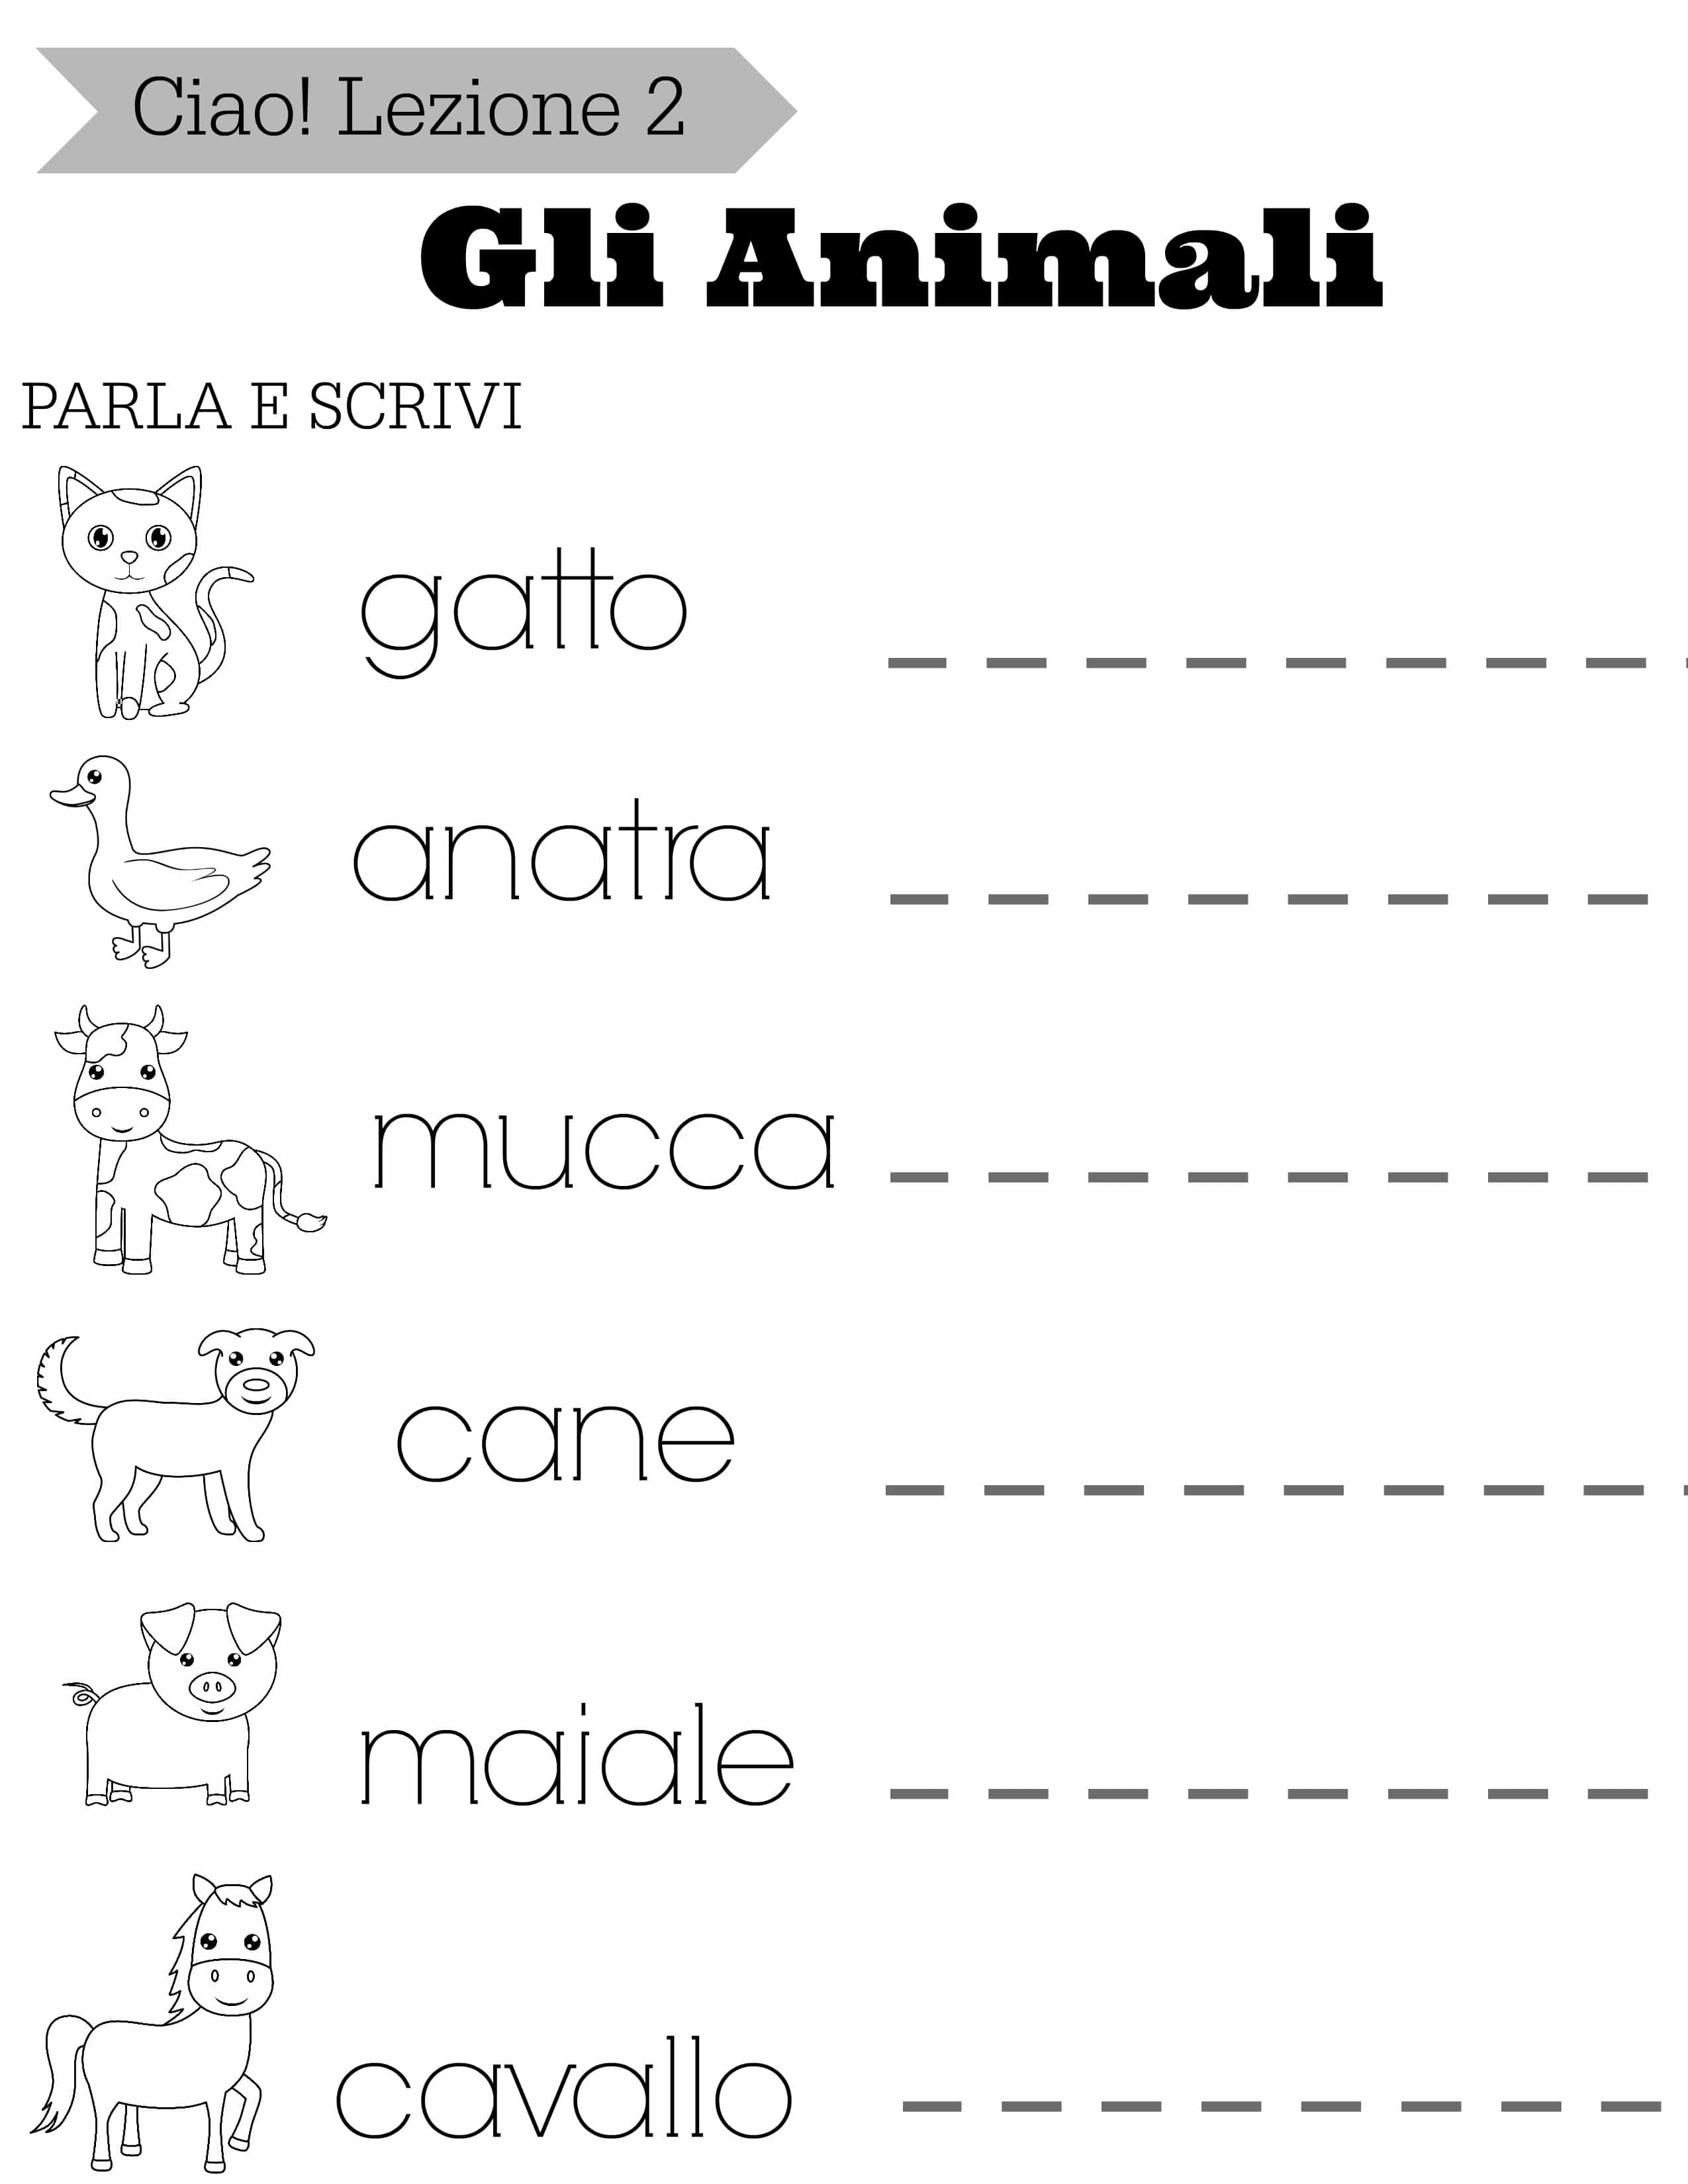 Simple Italian Lessons For Kids: Lezione 2 - Gli Animali | Italian Worksheets For Beginners Printable